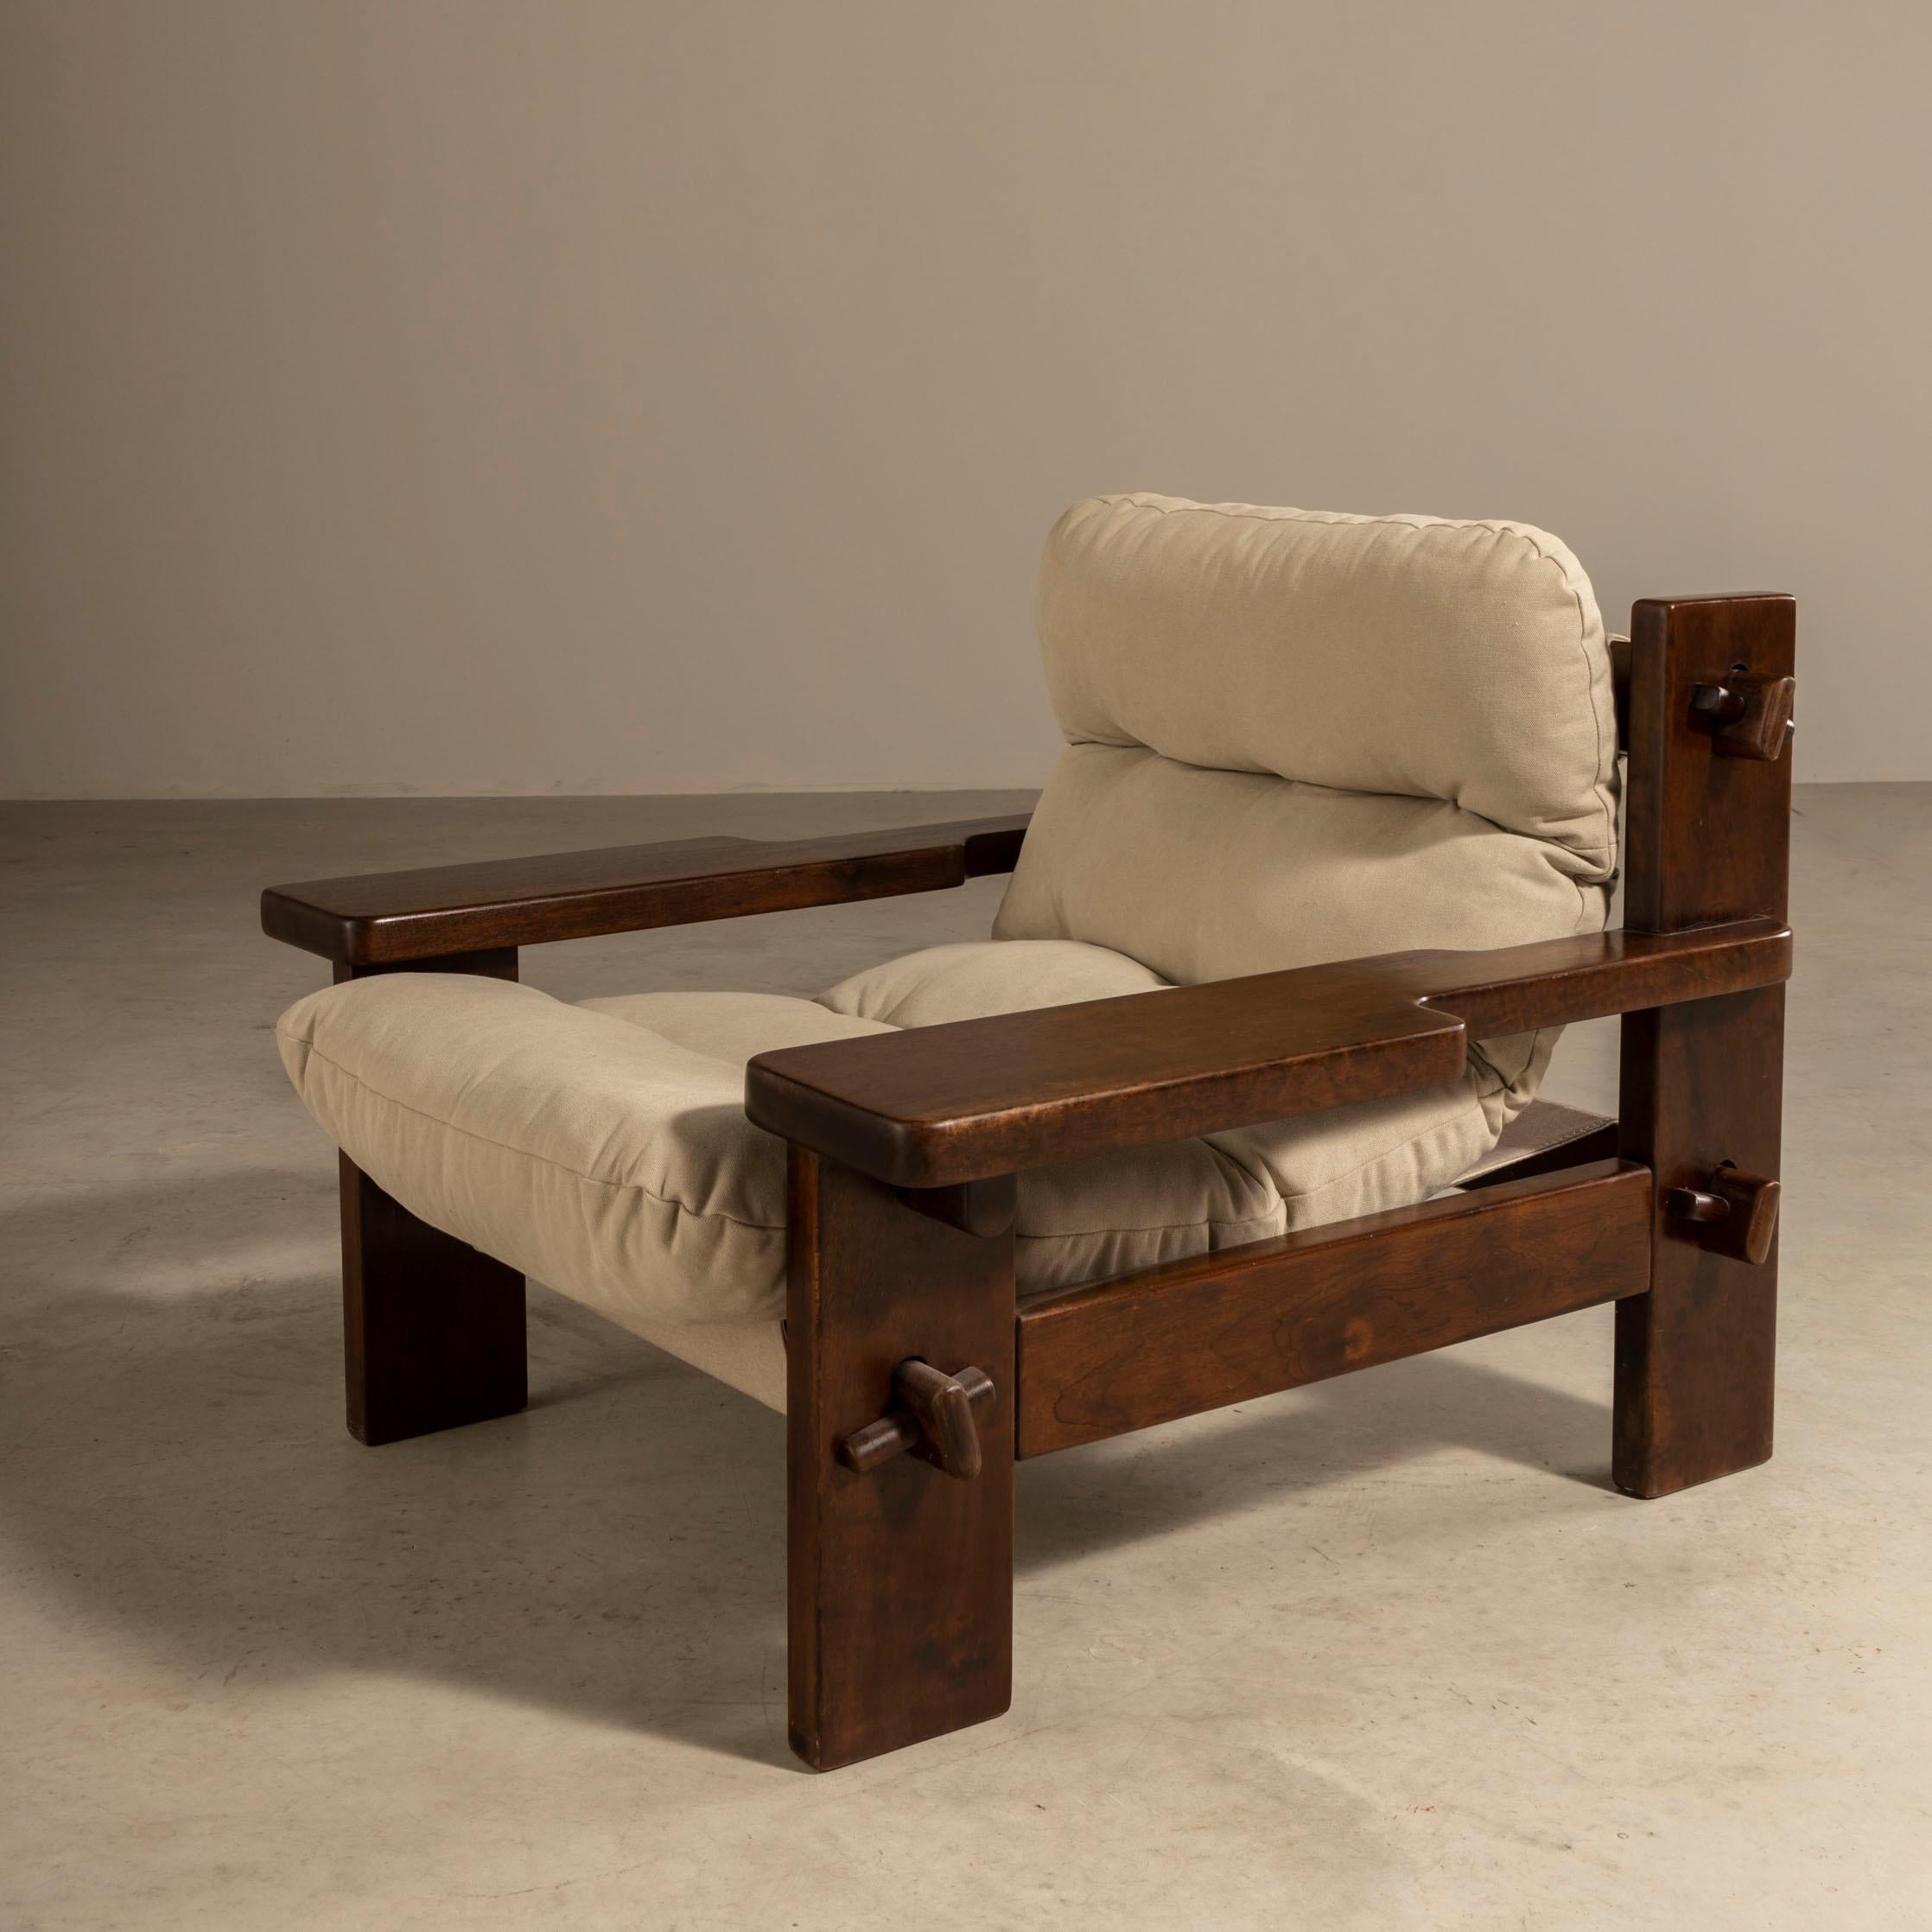 Lounge Chairs by Jean Gillon in Hardwood, Brazilian Midcentury Modern Design 4